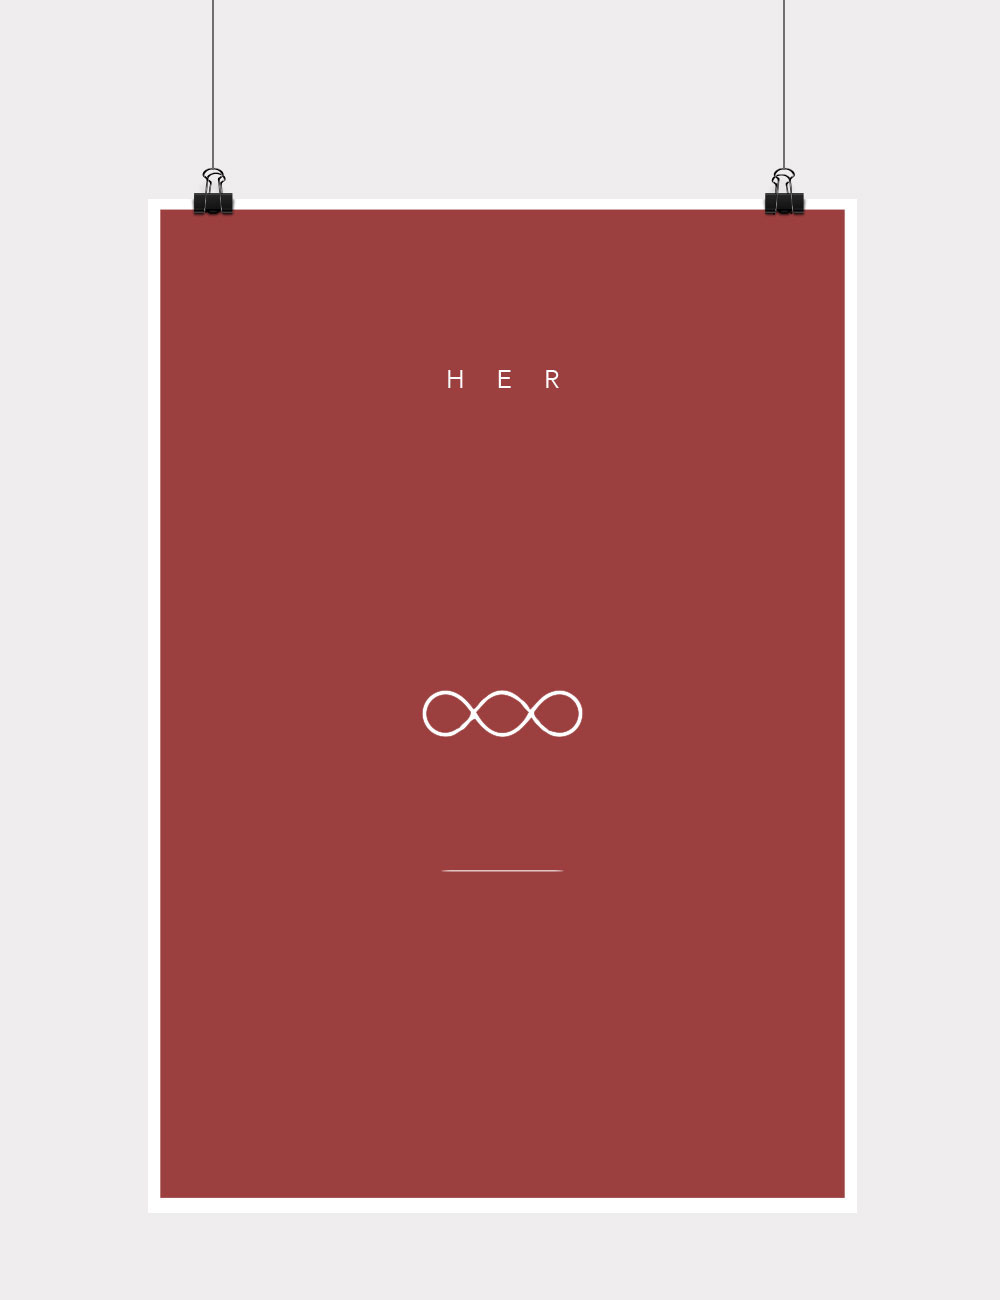 minimalist simple movie poster interstellar godzilla prestige memento The Great Gatsby Hunger Games movie poster jakarta